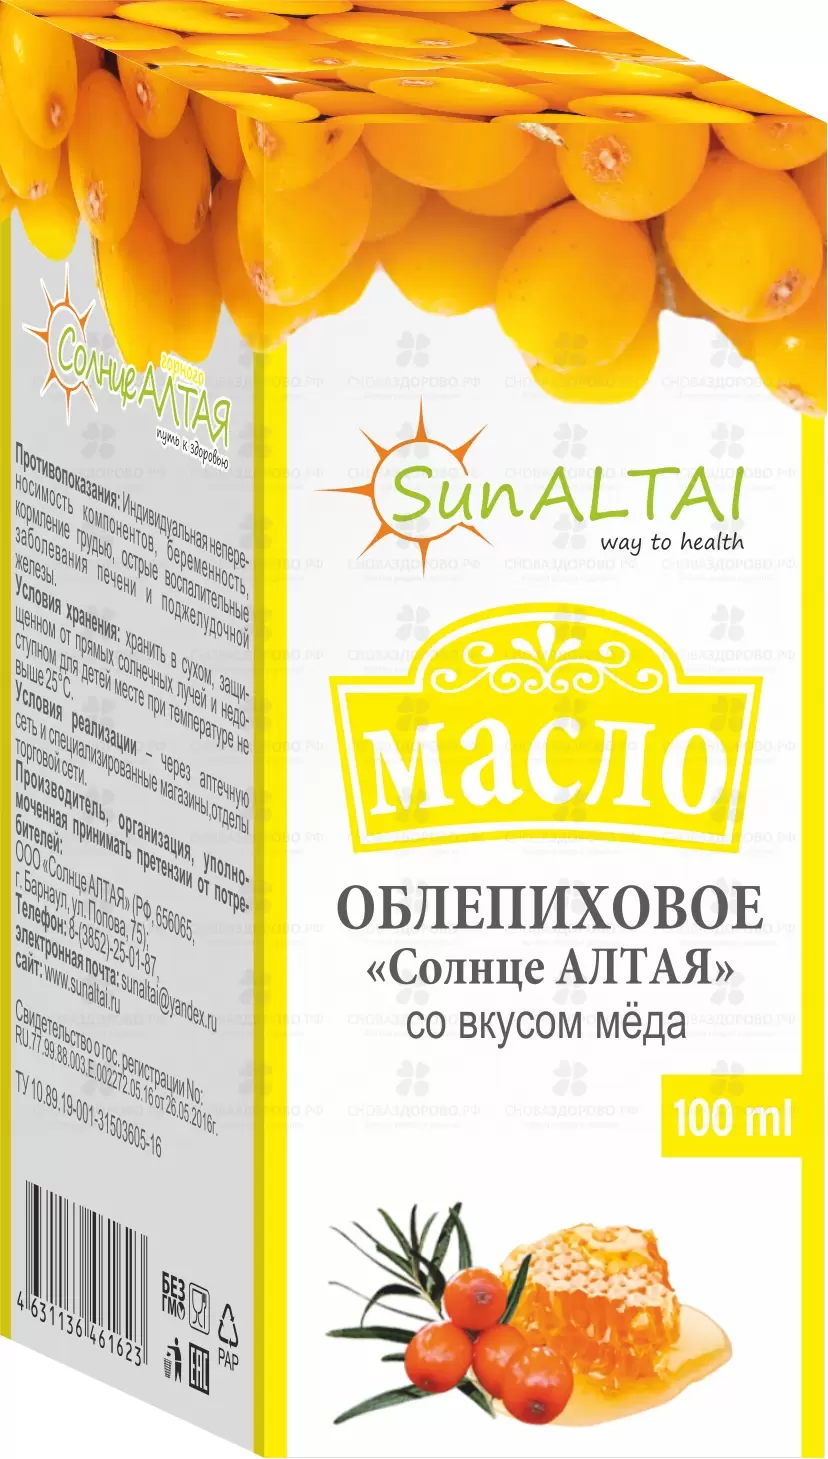 Облепиховое масло "Солнце Алтая" вкус мёда 100мл (БАД) ✅ 28513/06298 | Сноваздорово.рф